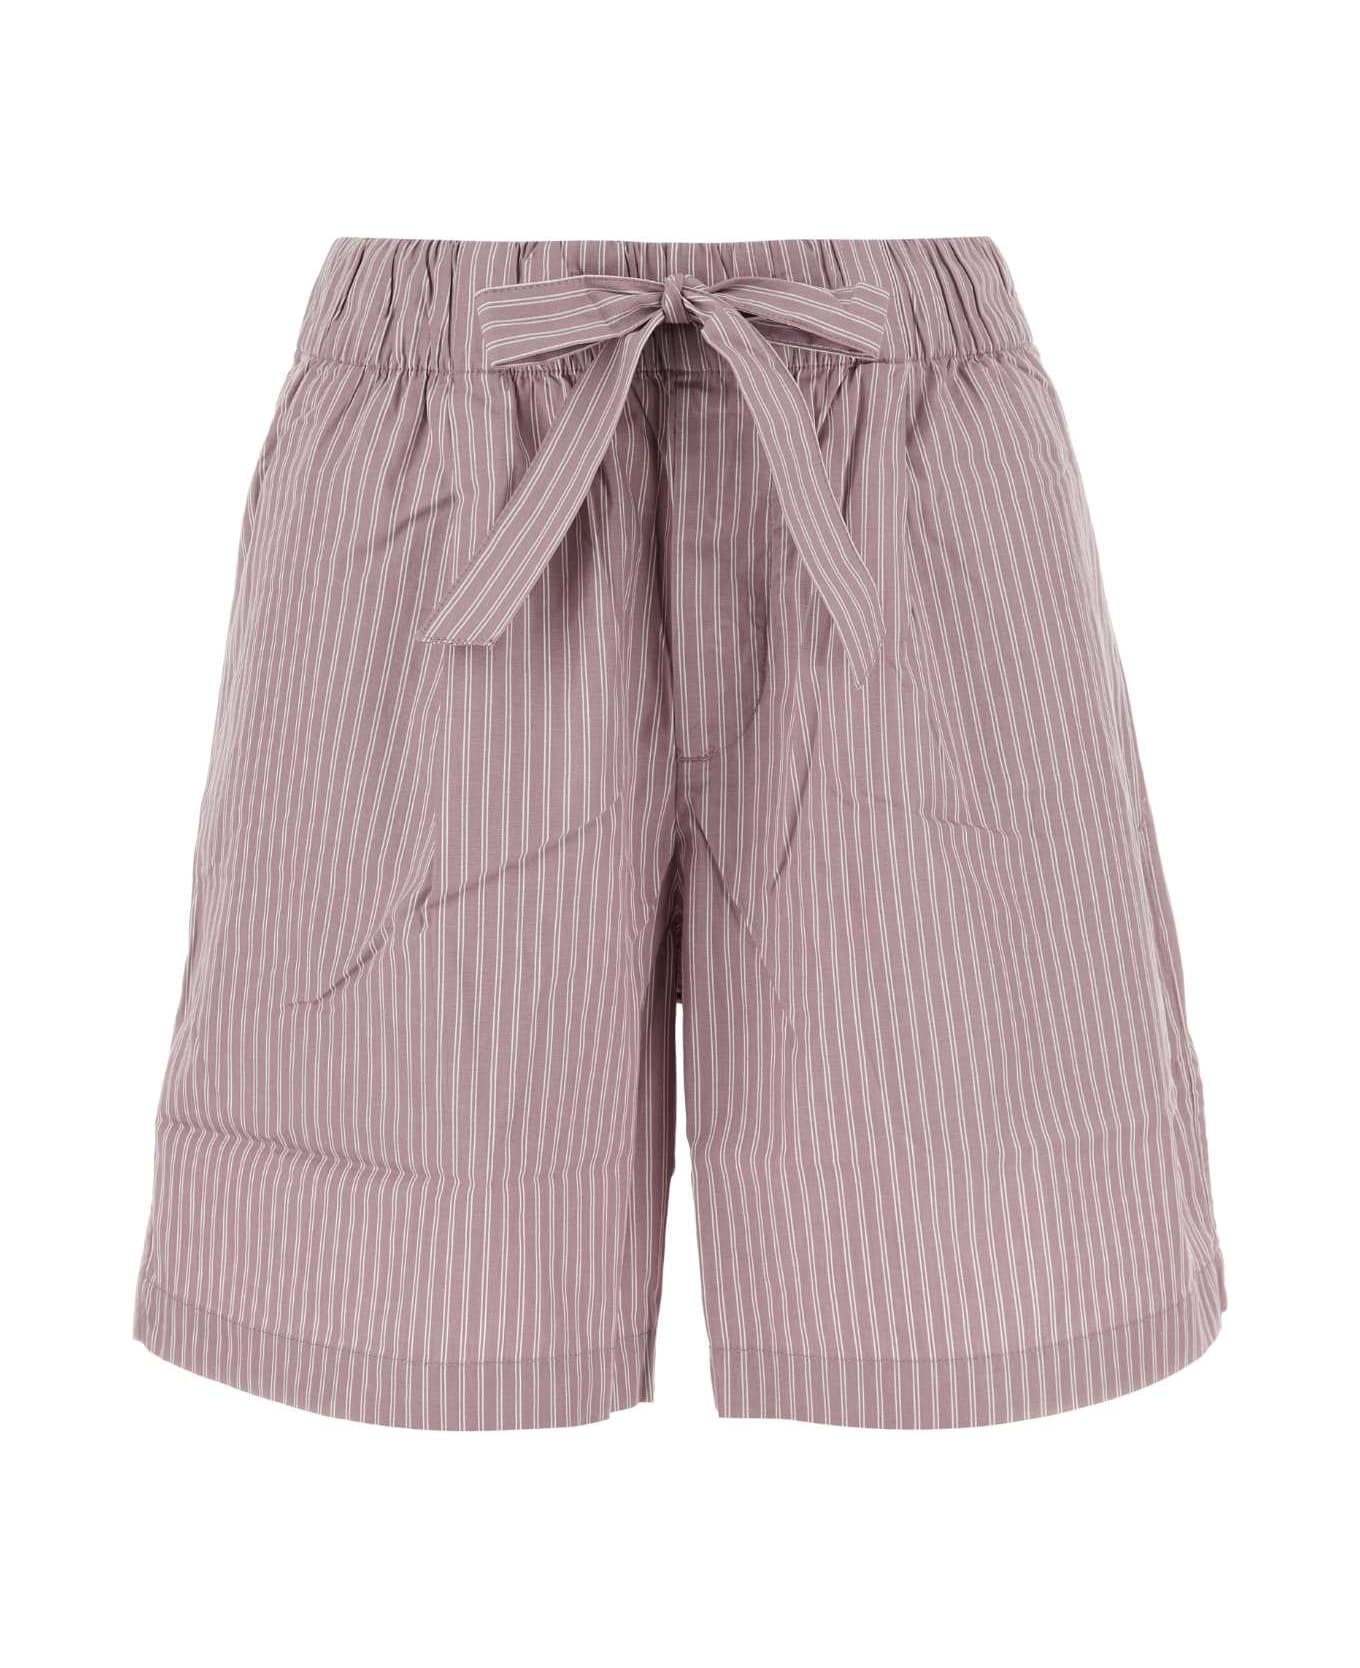 Tekla Embroidered Cotton Pyjama Shorts - MAUVESTRIPES